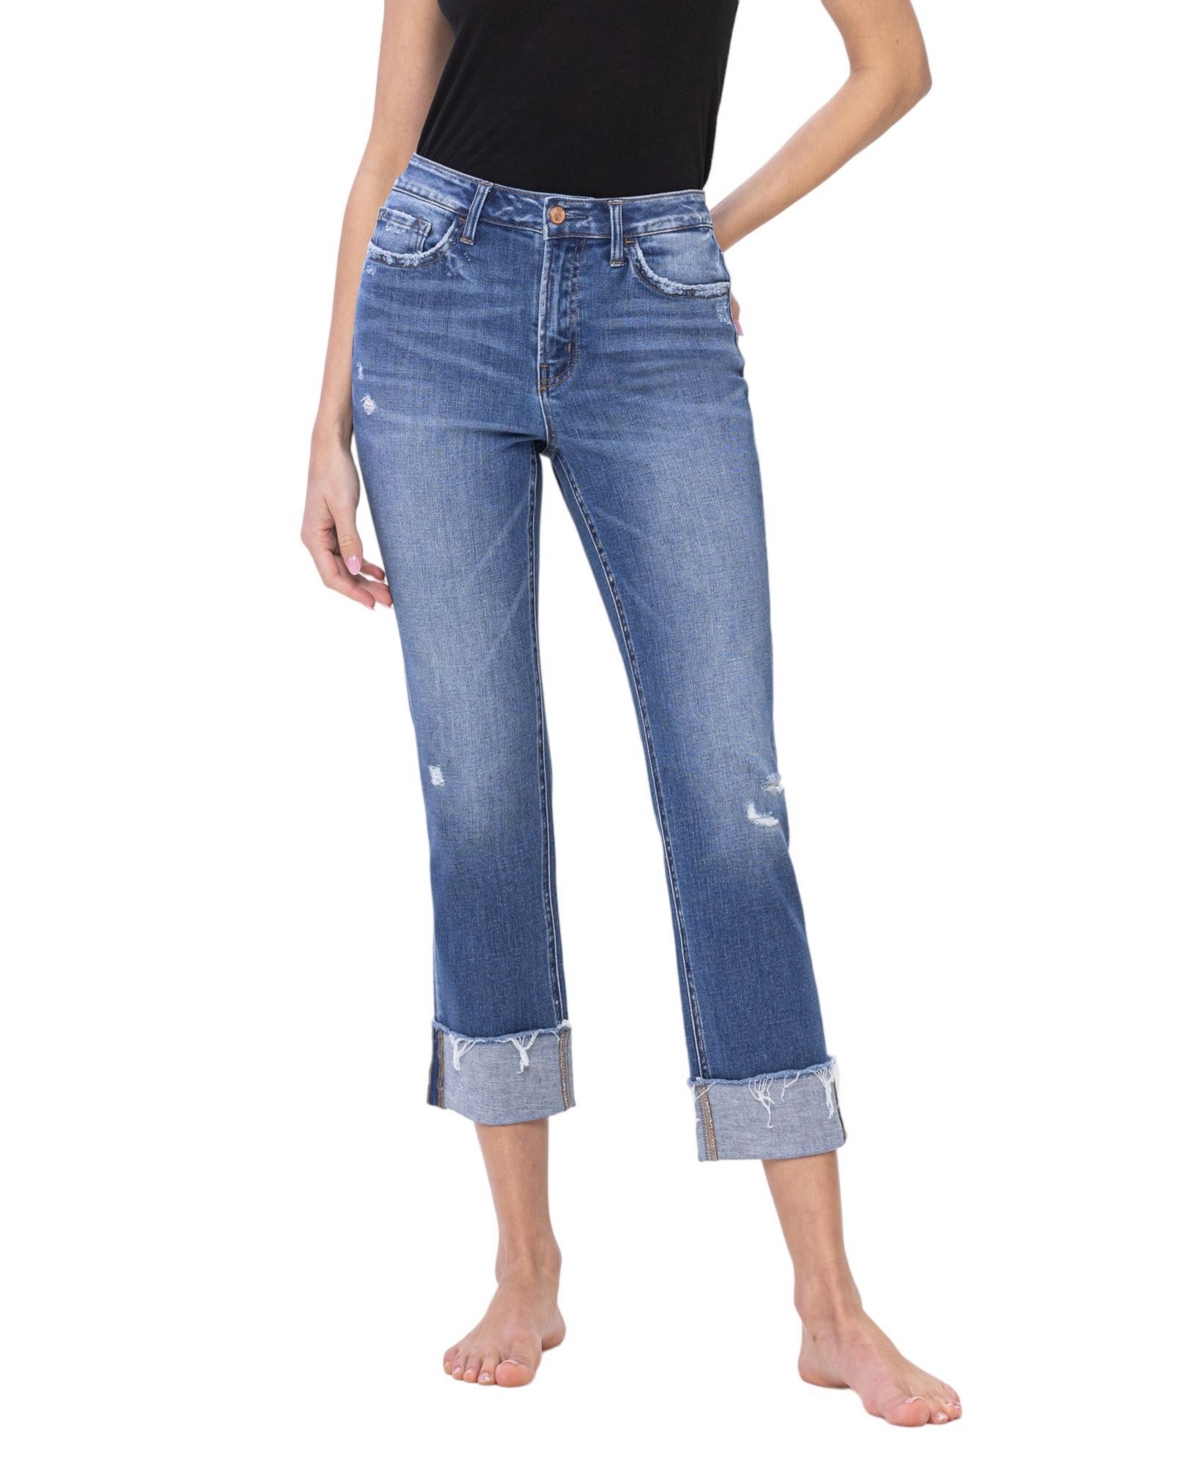 Women's High Rise Regular Cuffed Straight Jeans - Sensible blue